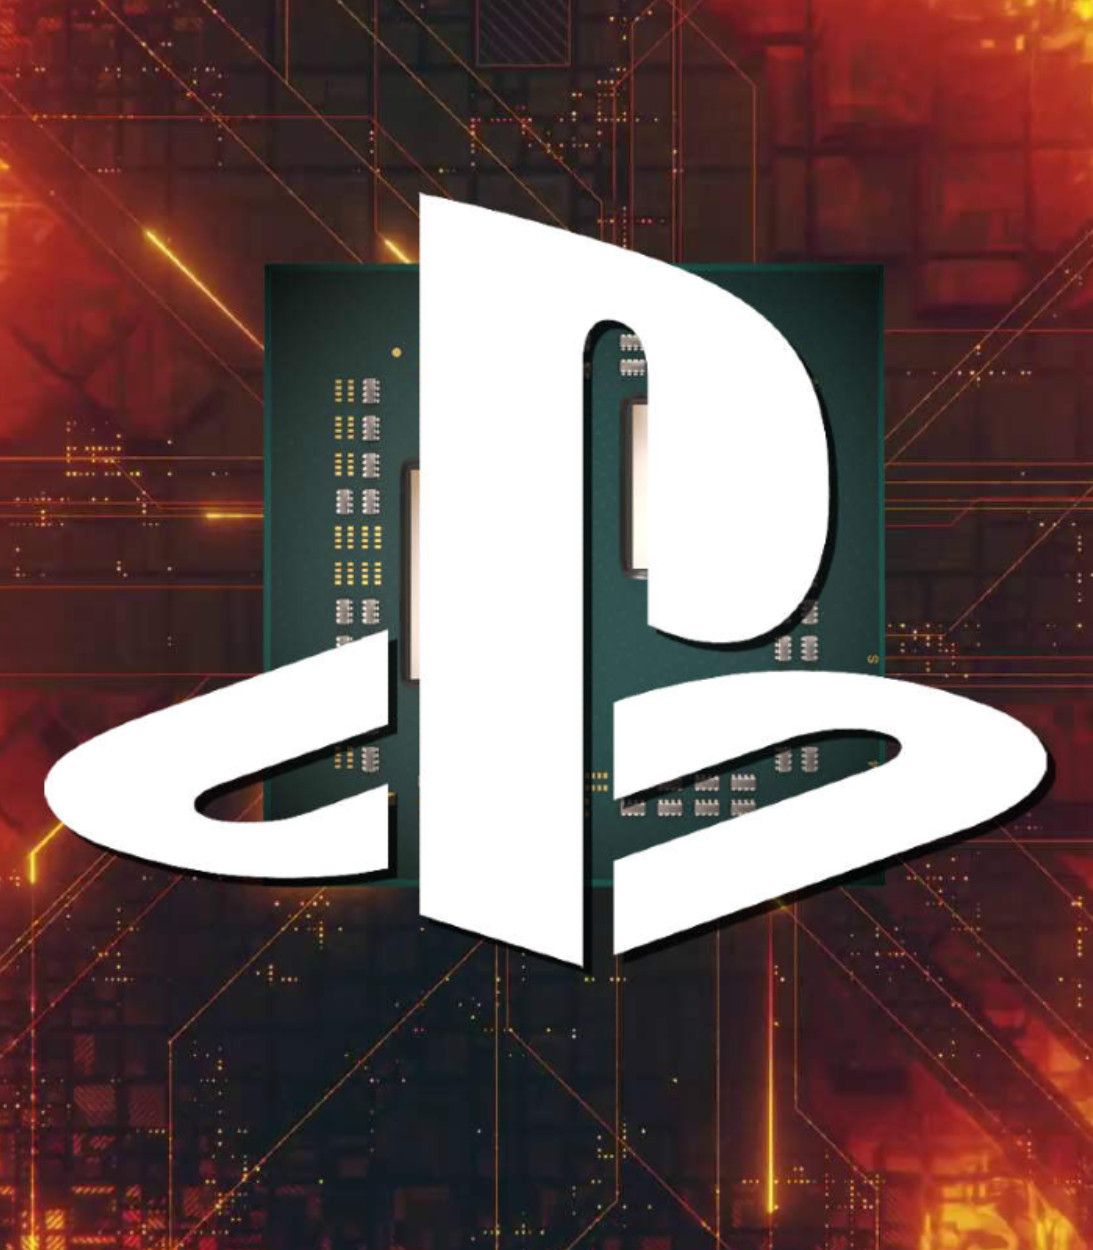 PS5 logo - heat image (TLDR)